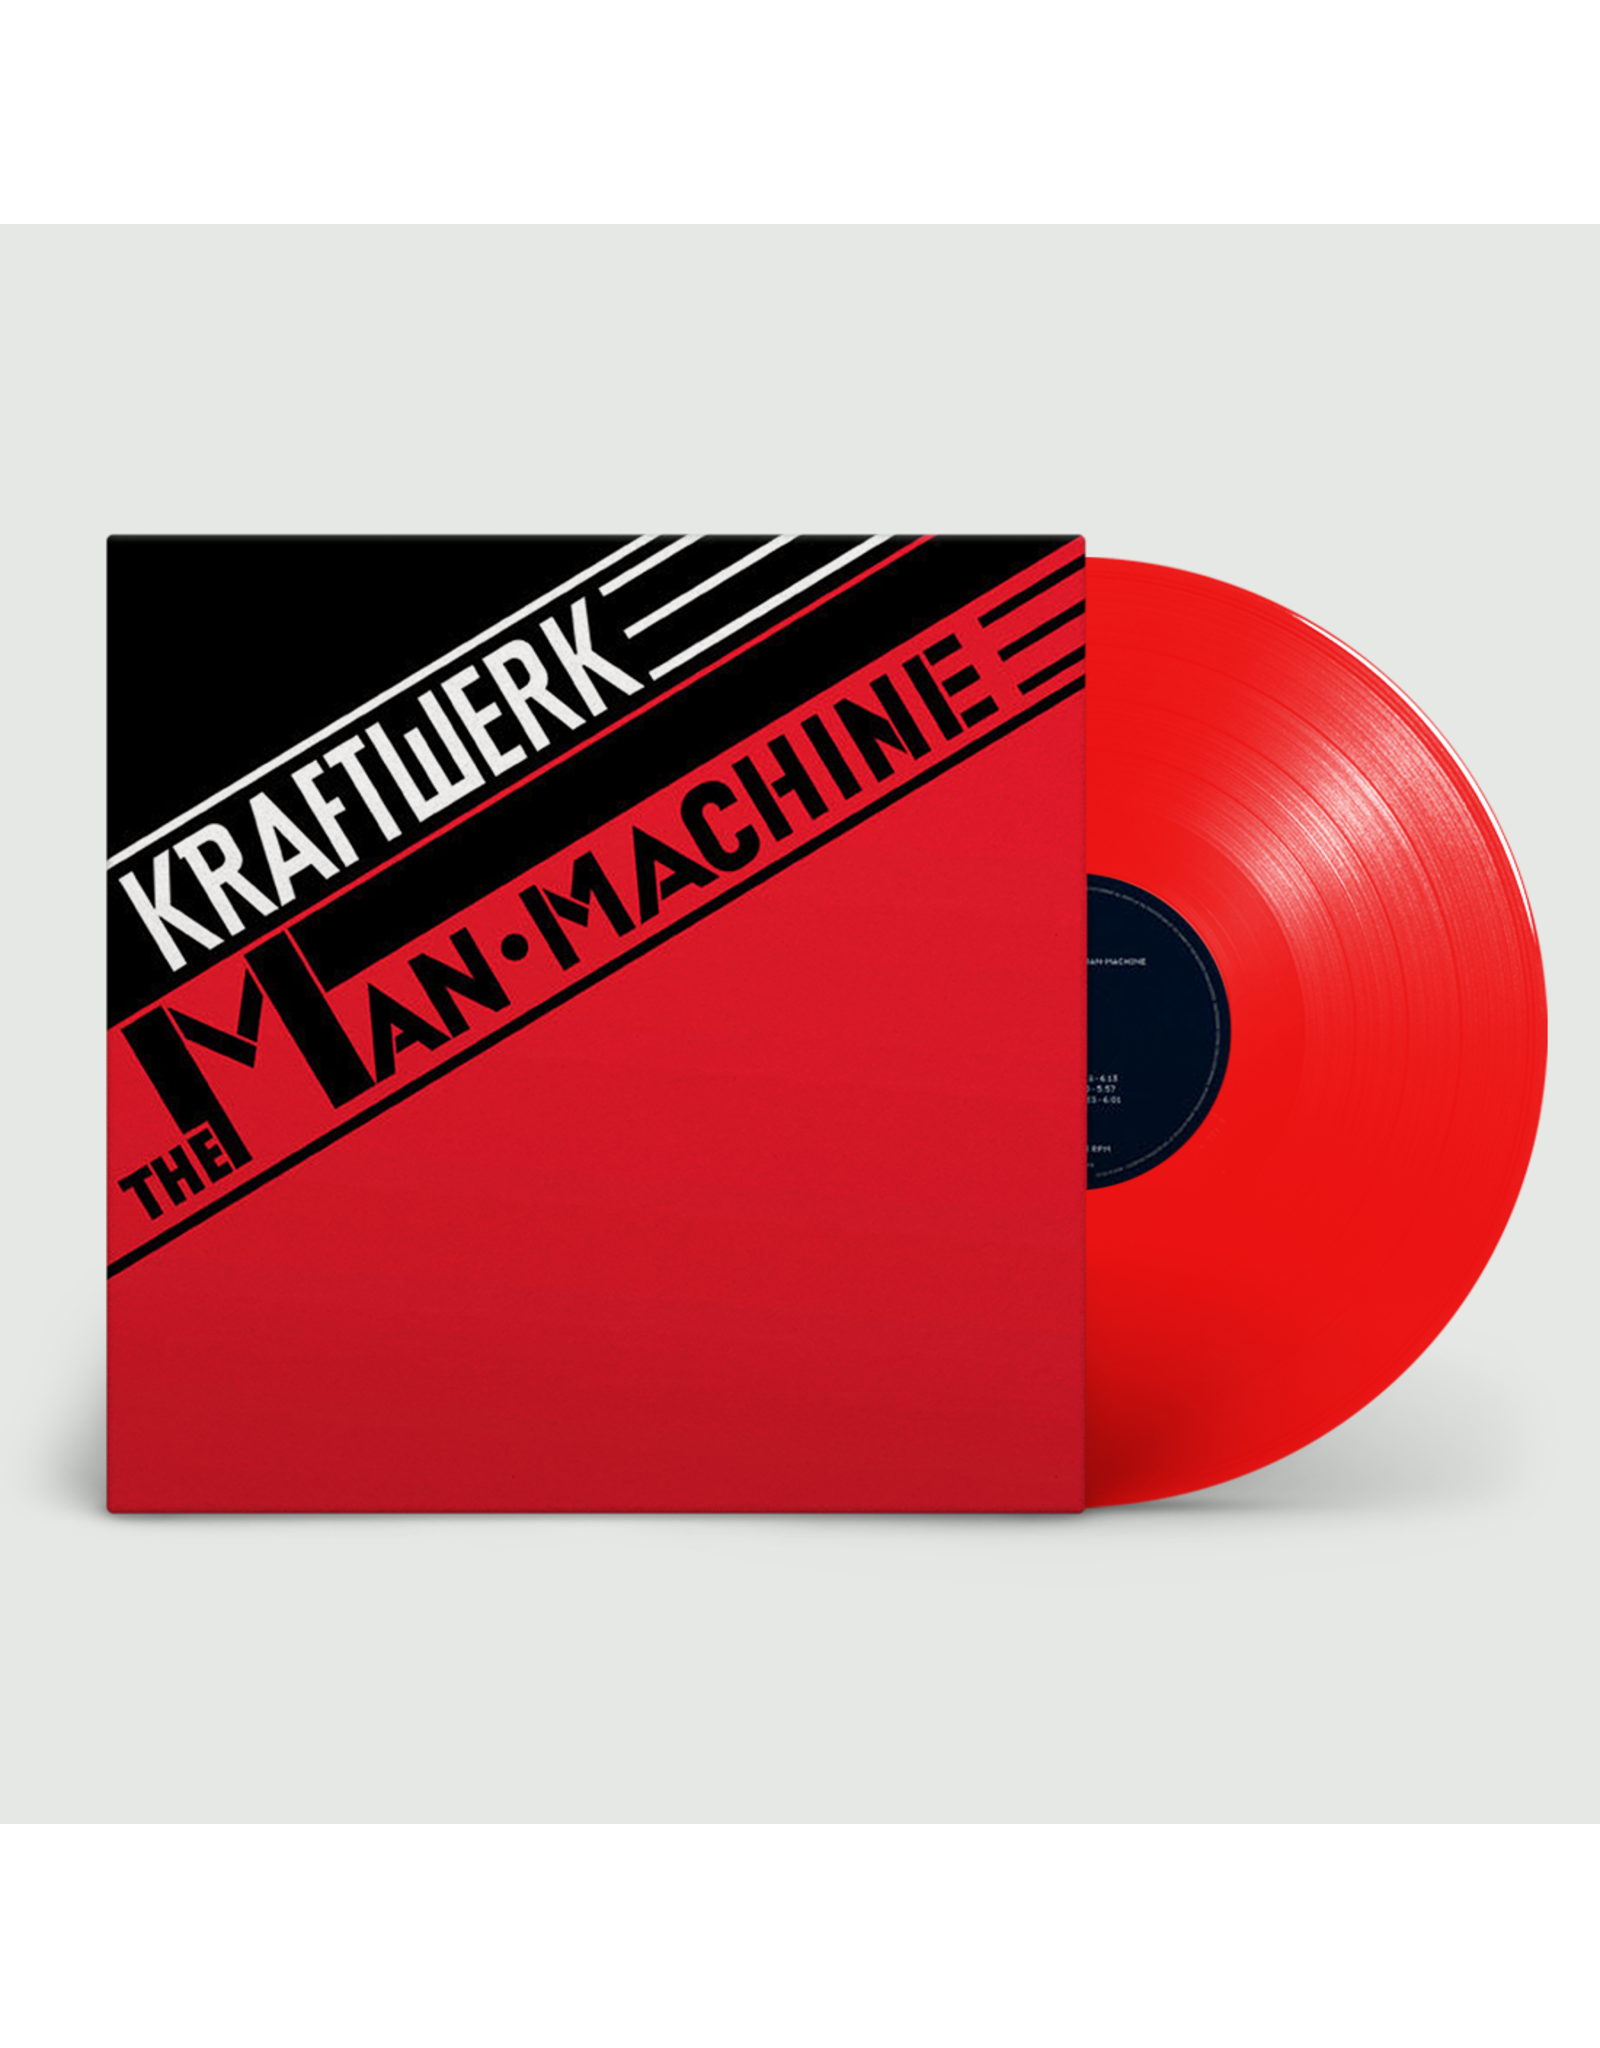 Parlophone Kraftwerk: Man Machine (Red vinyl) LP